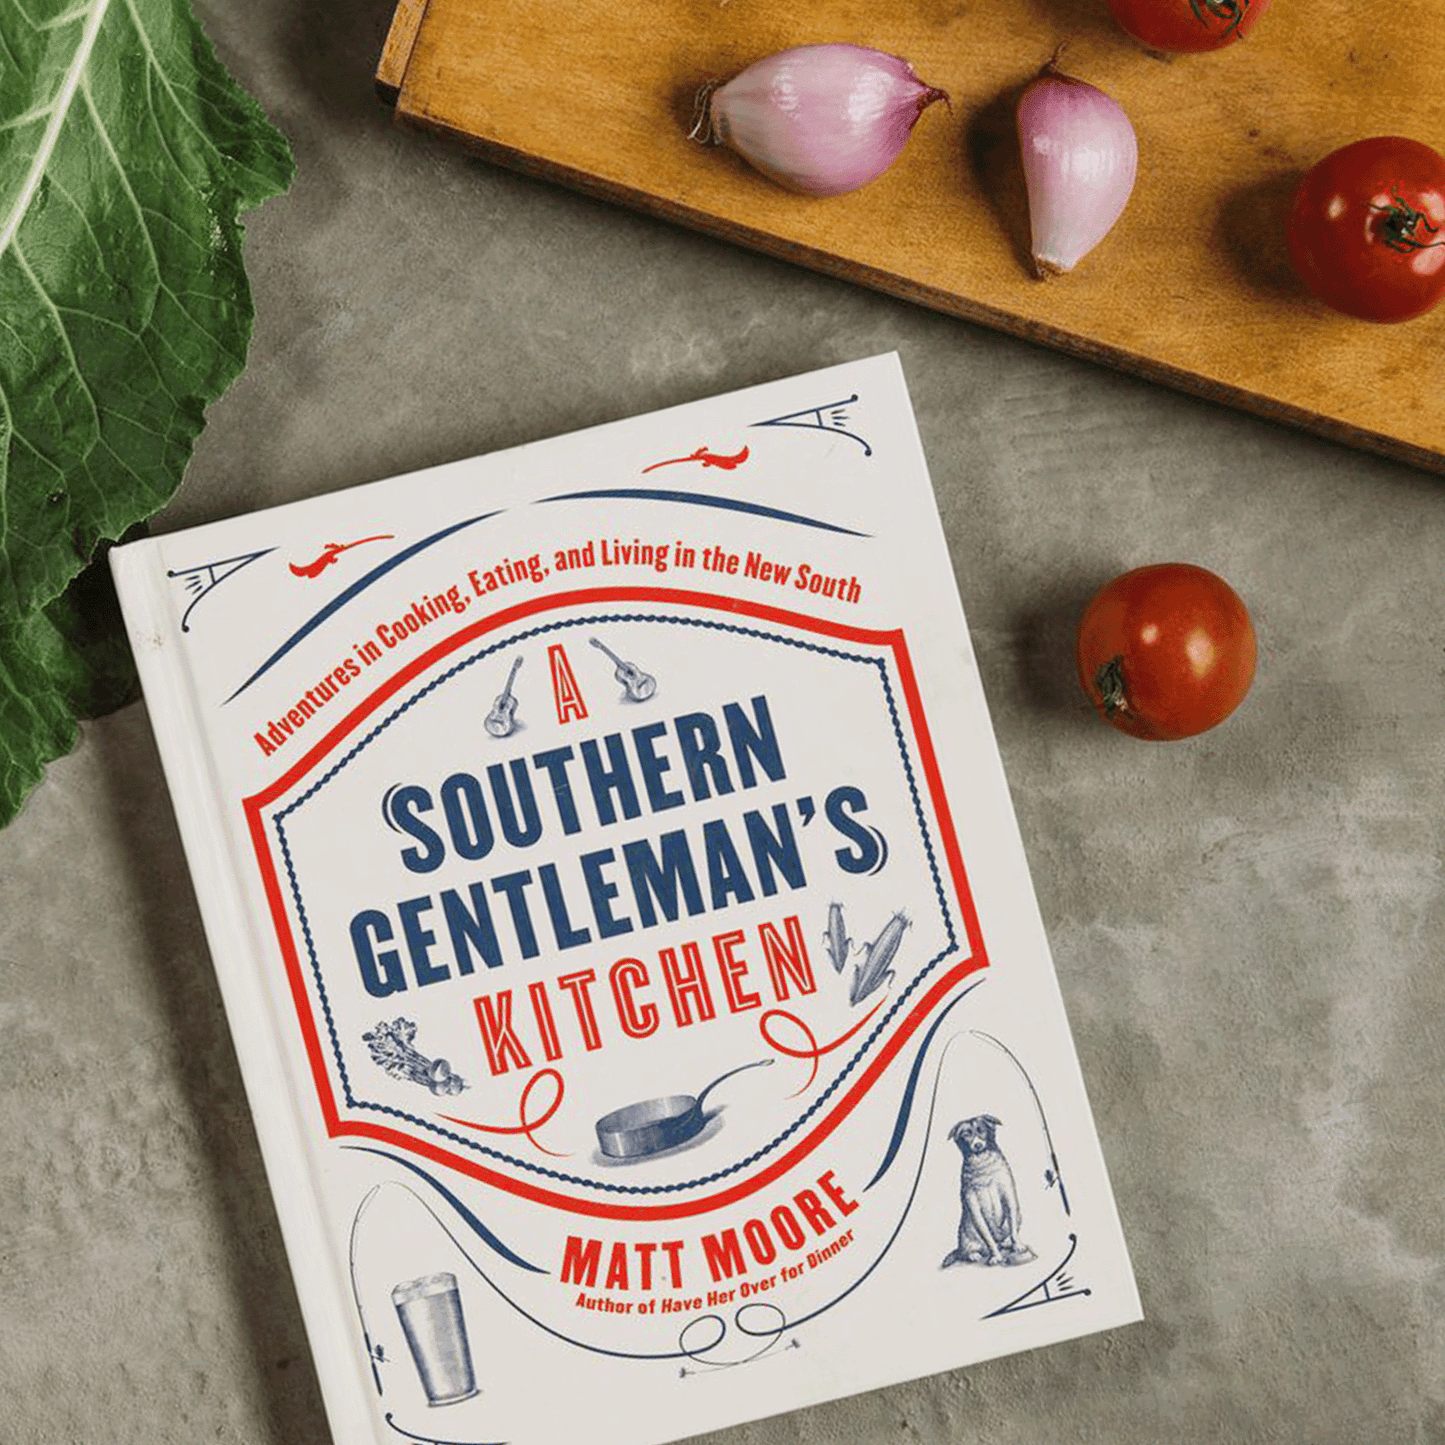 A Southern Gentleman's Kitchen Book